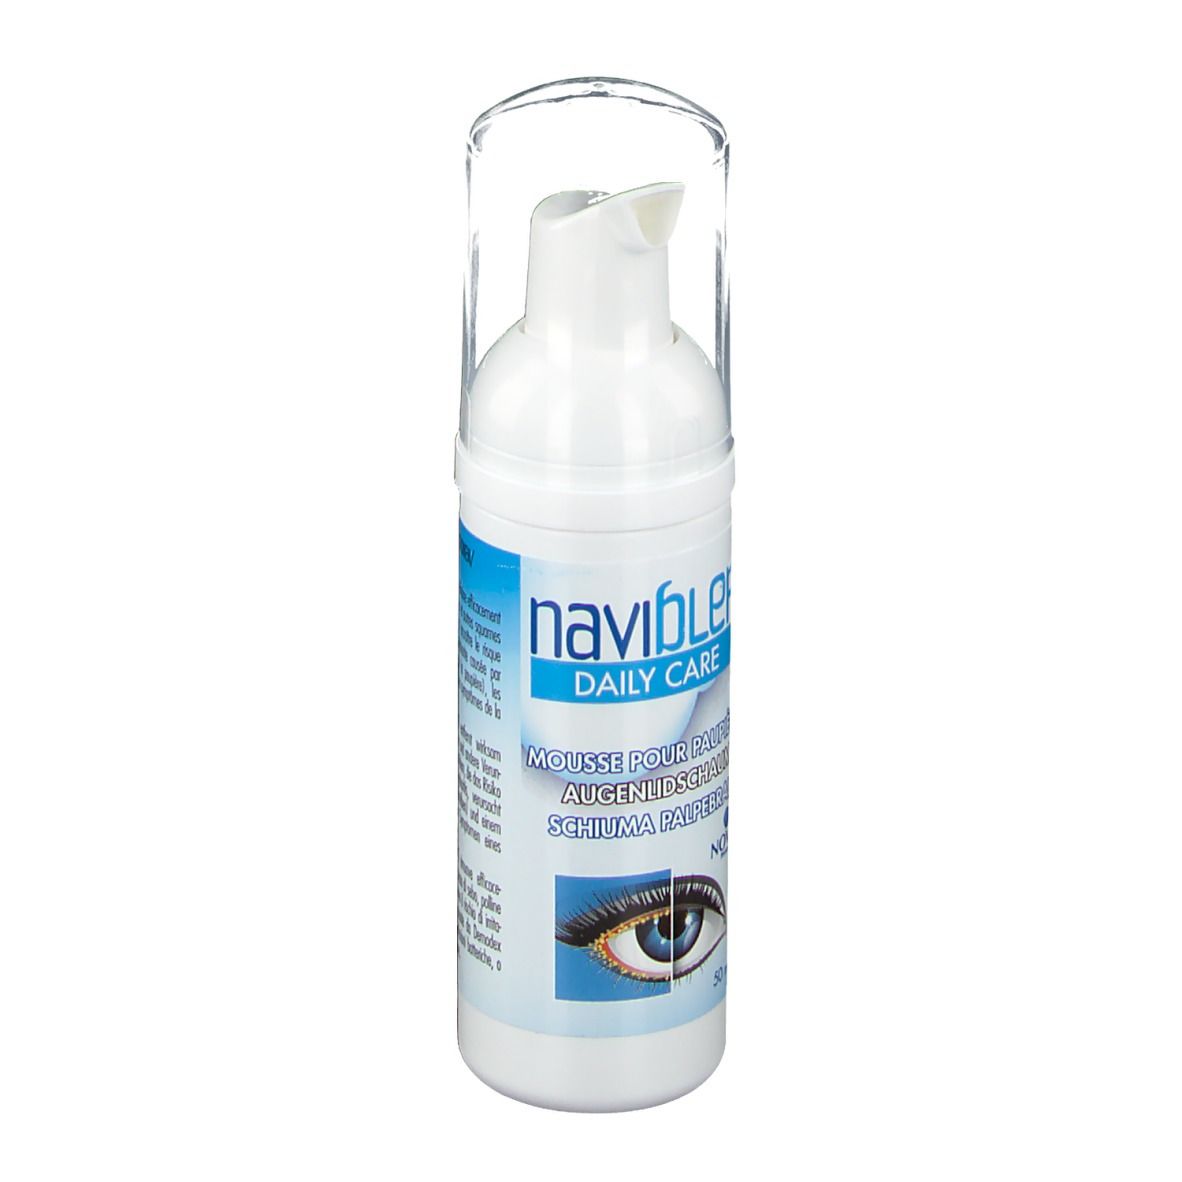 Naviblef® Daily Care Augenlidschaum